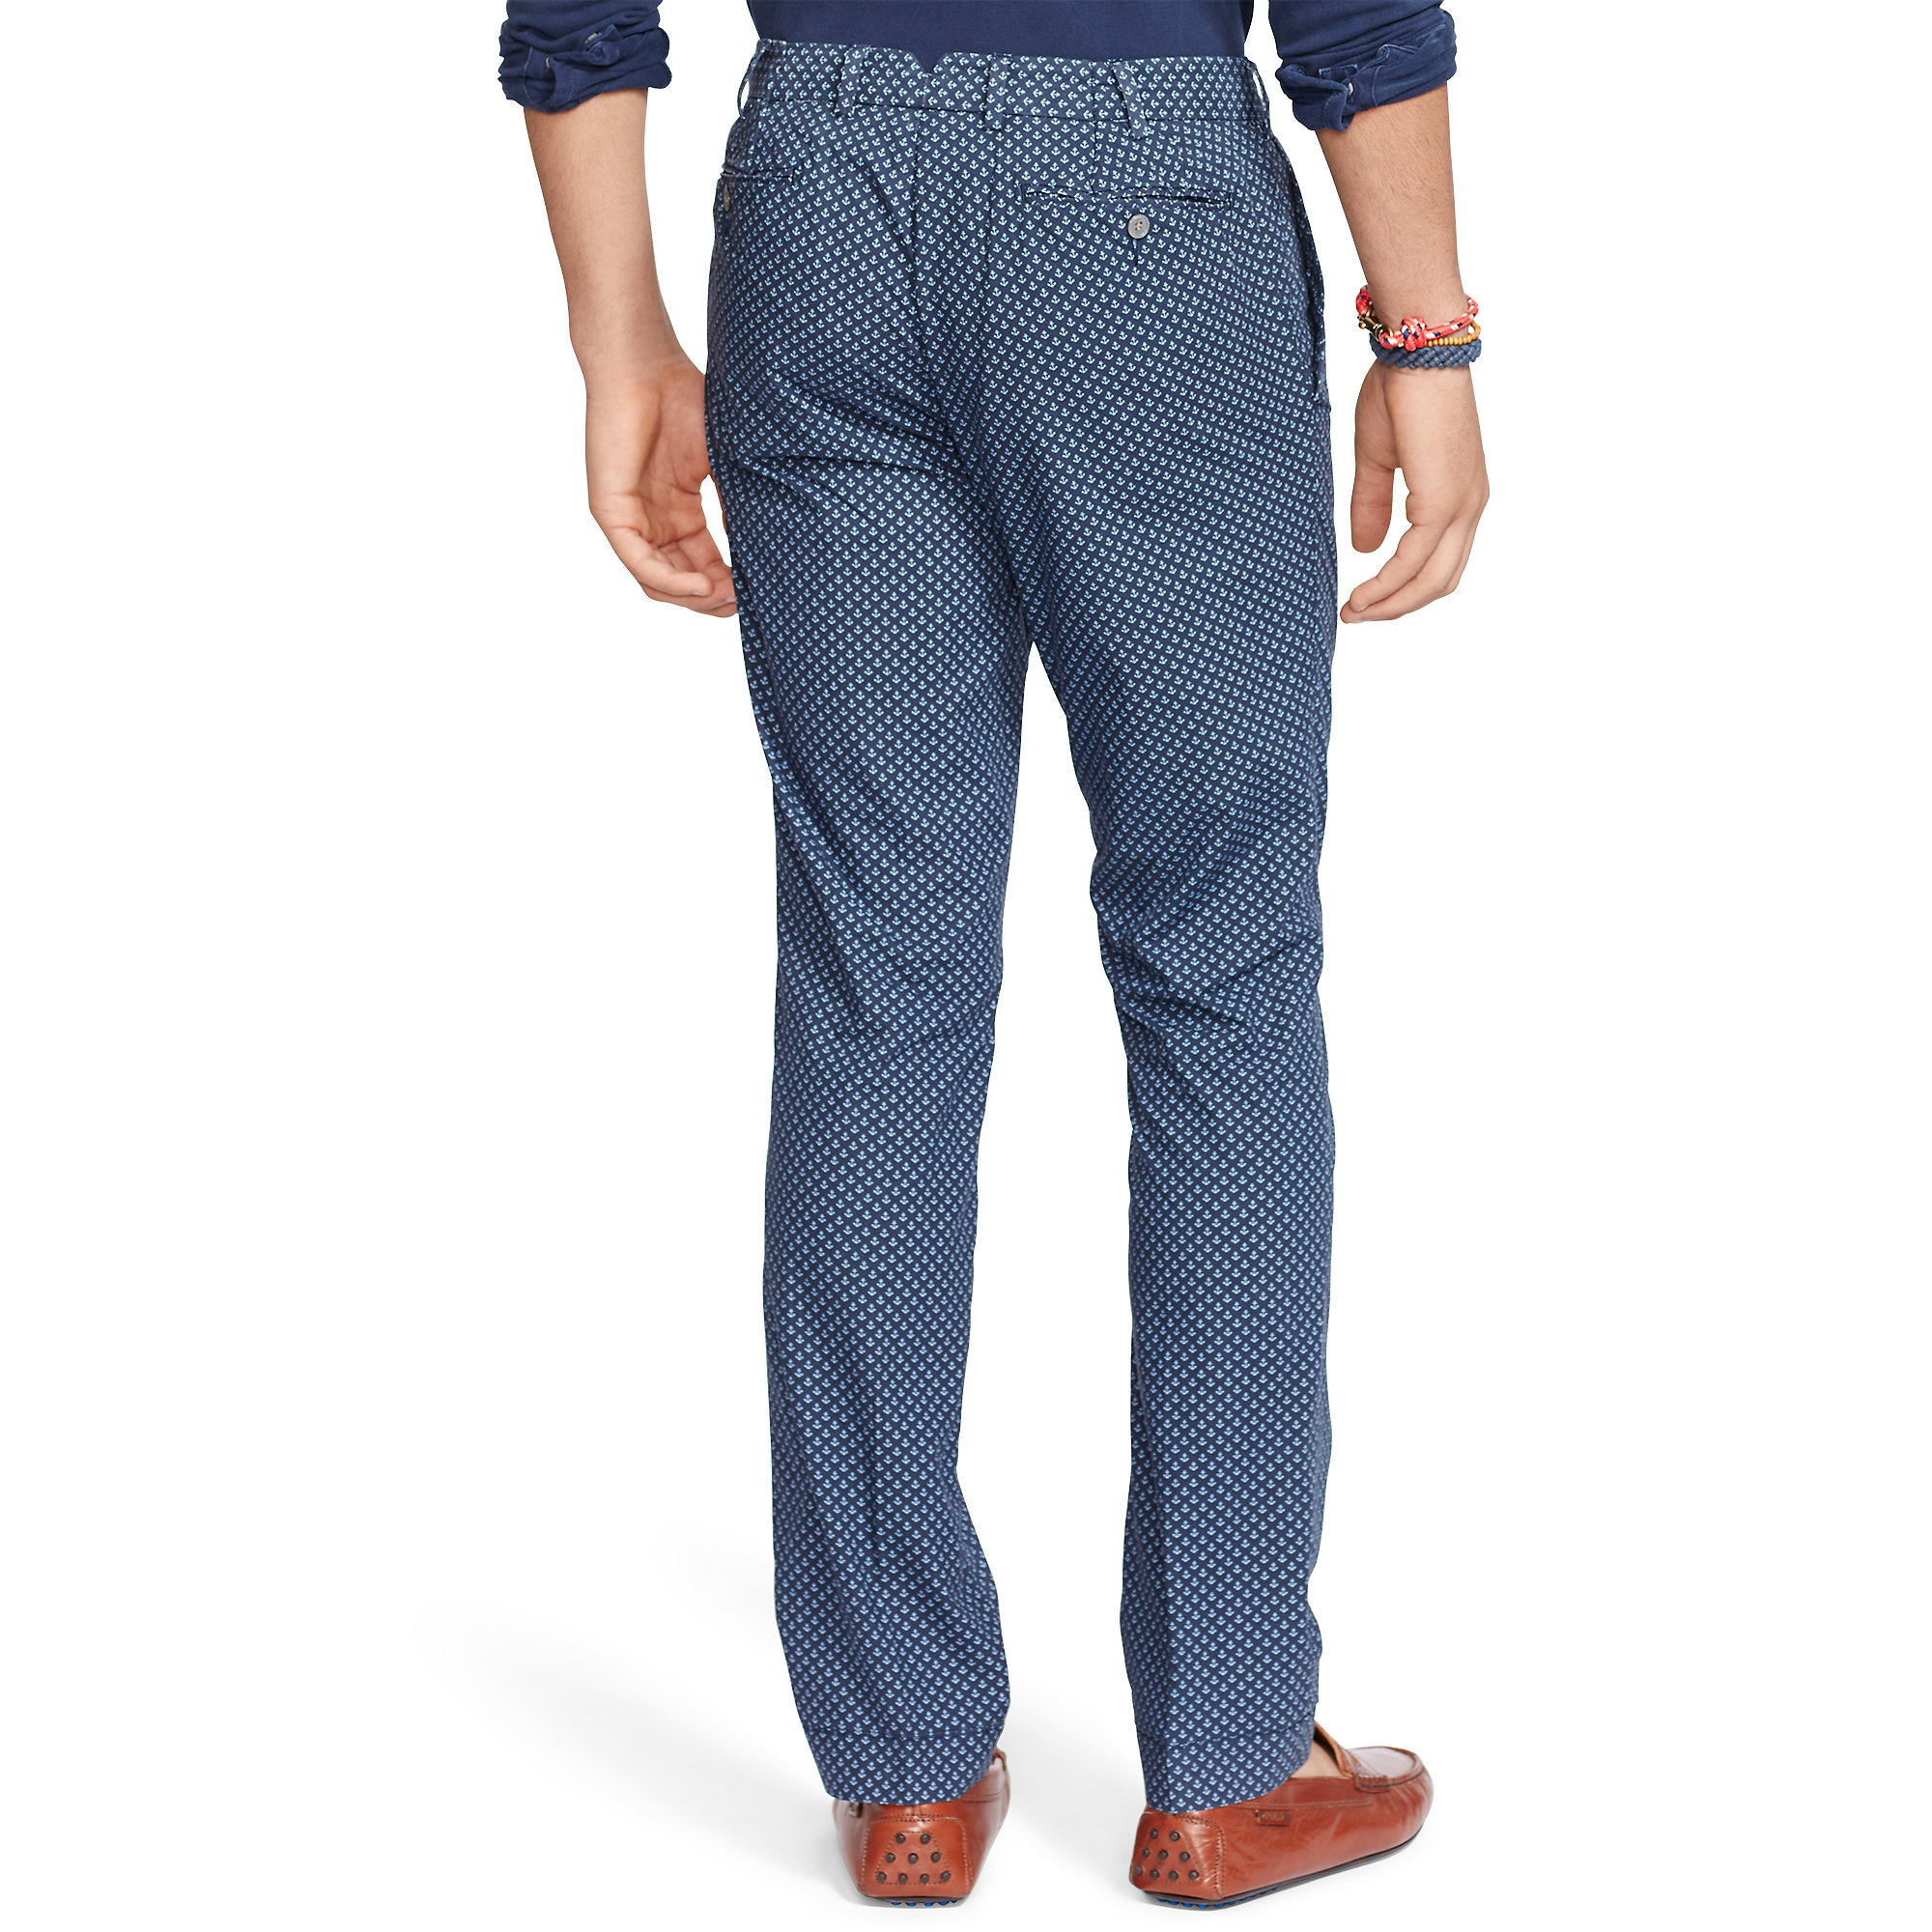 Lyst - Polo Ralph Lauren Slim-fit Anchor Cotton Pant in Blue for Men